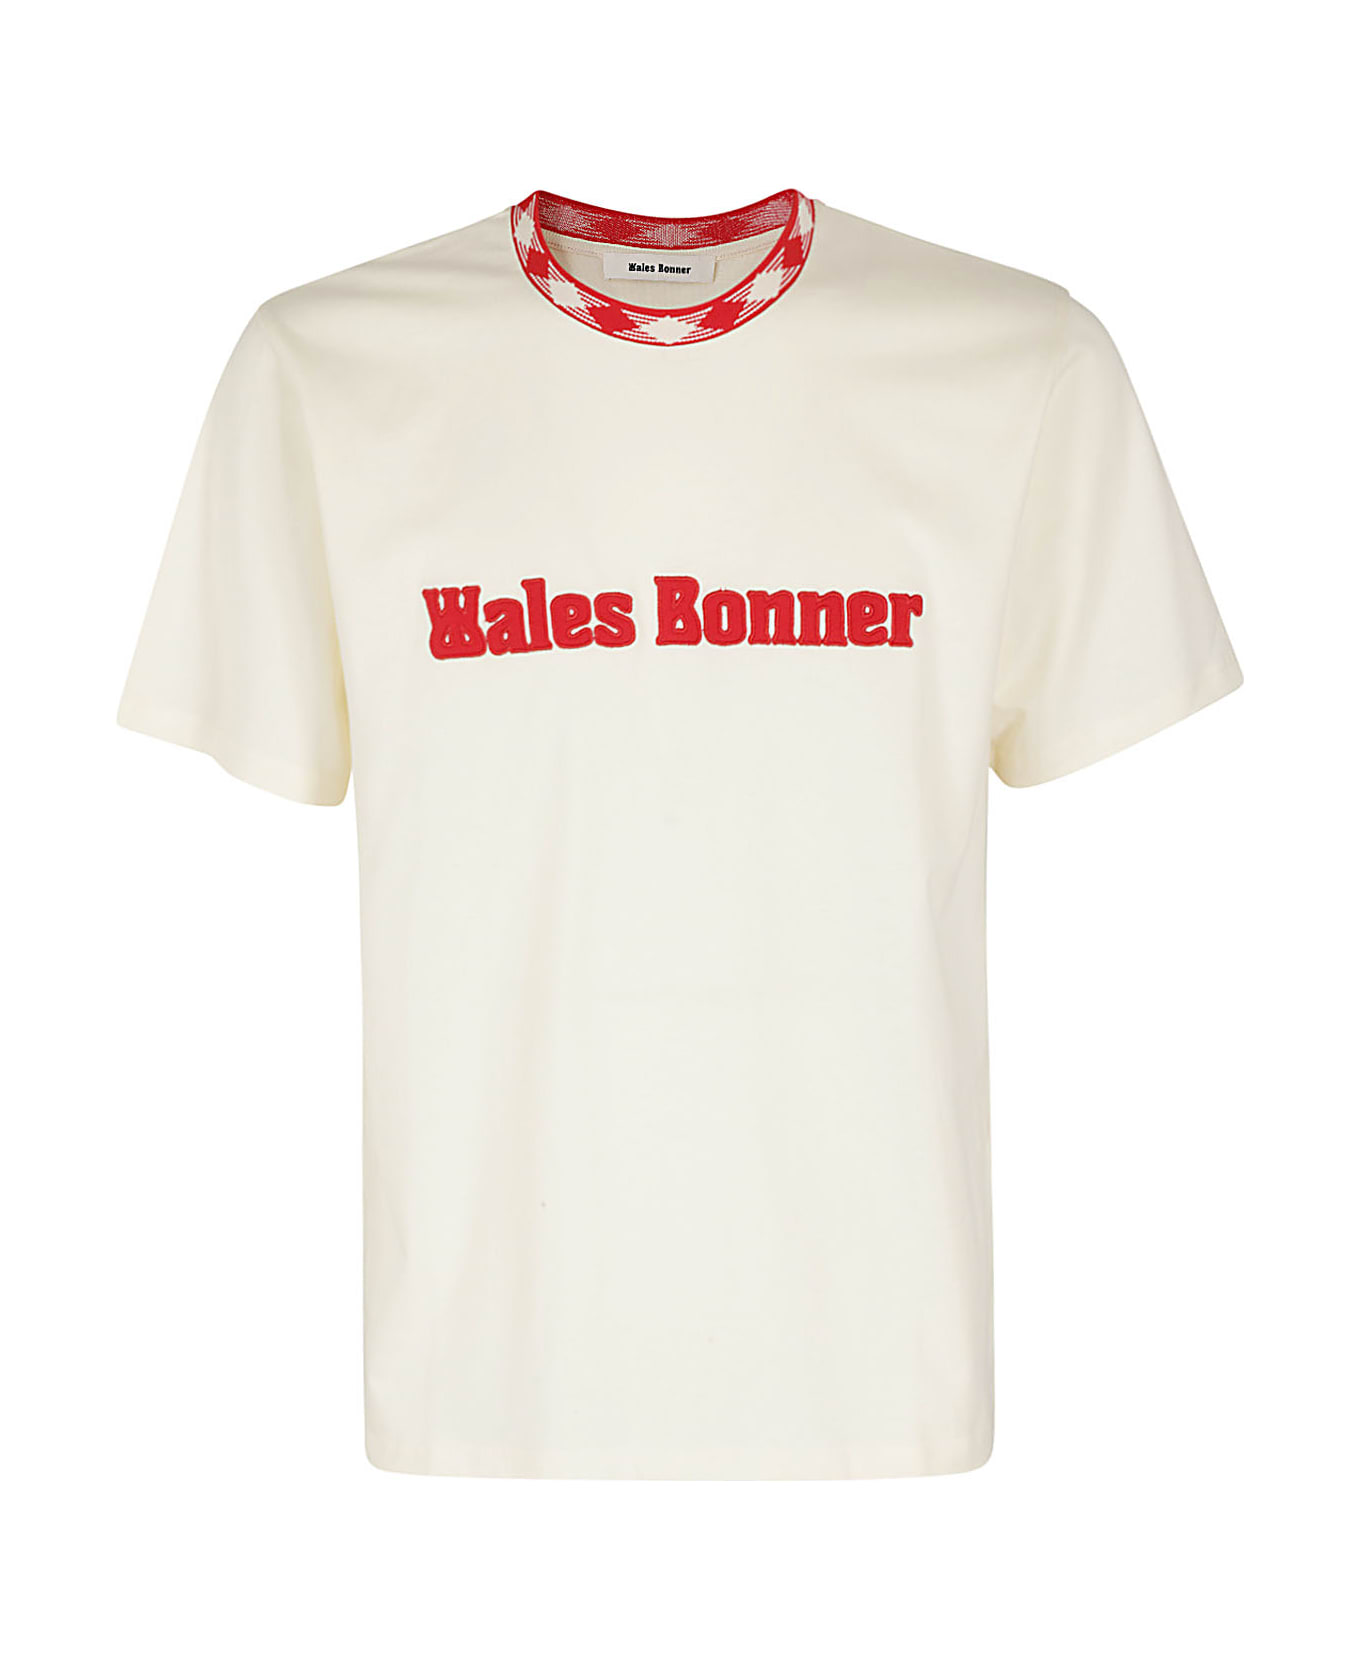 Wales Bonner Original Tee - Ivory シャツ